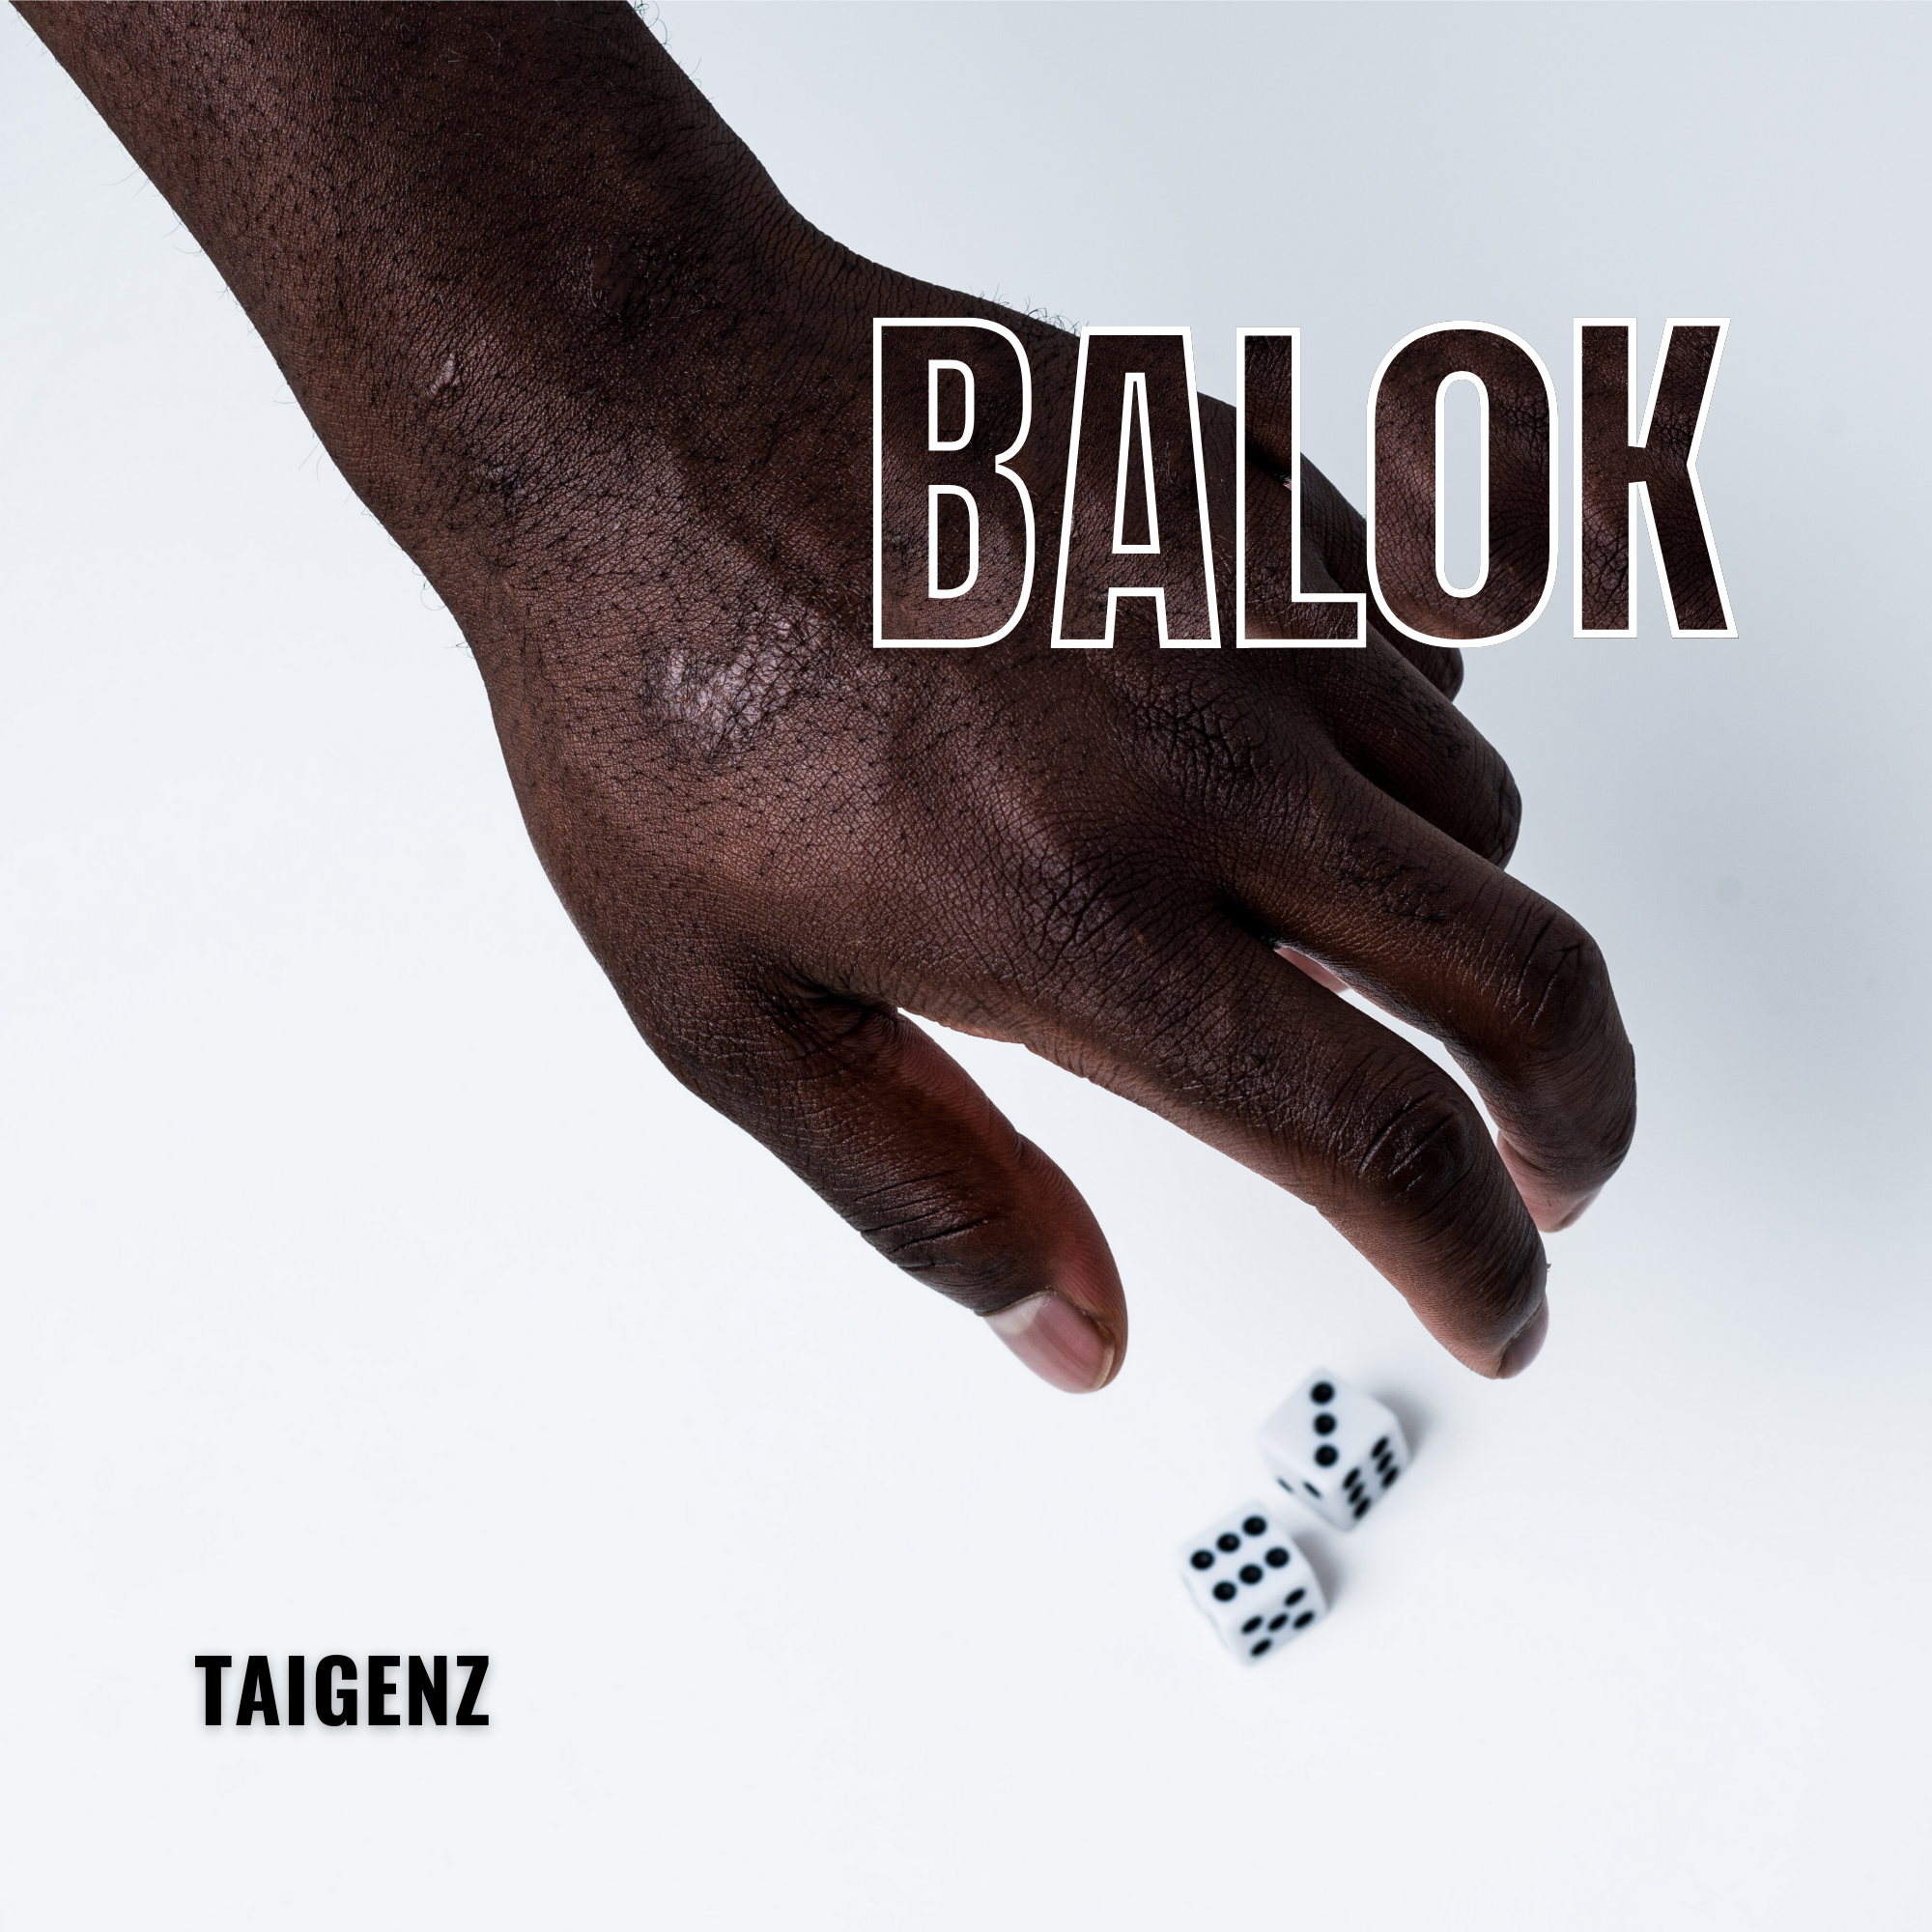 Taigenz "Balok" single artwork